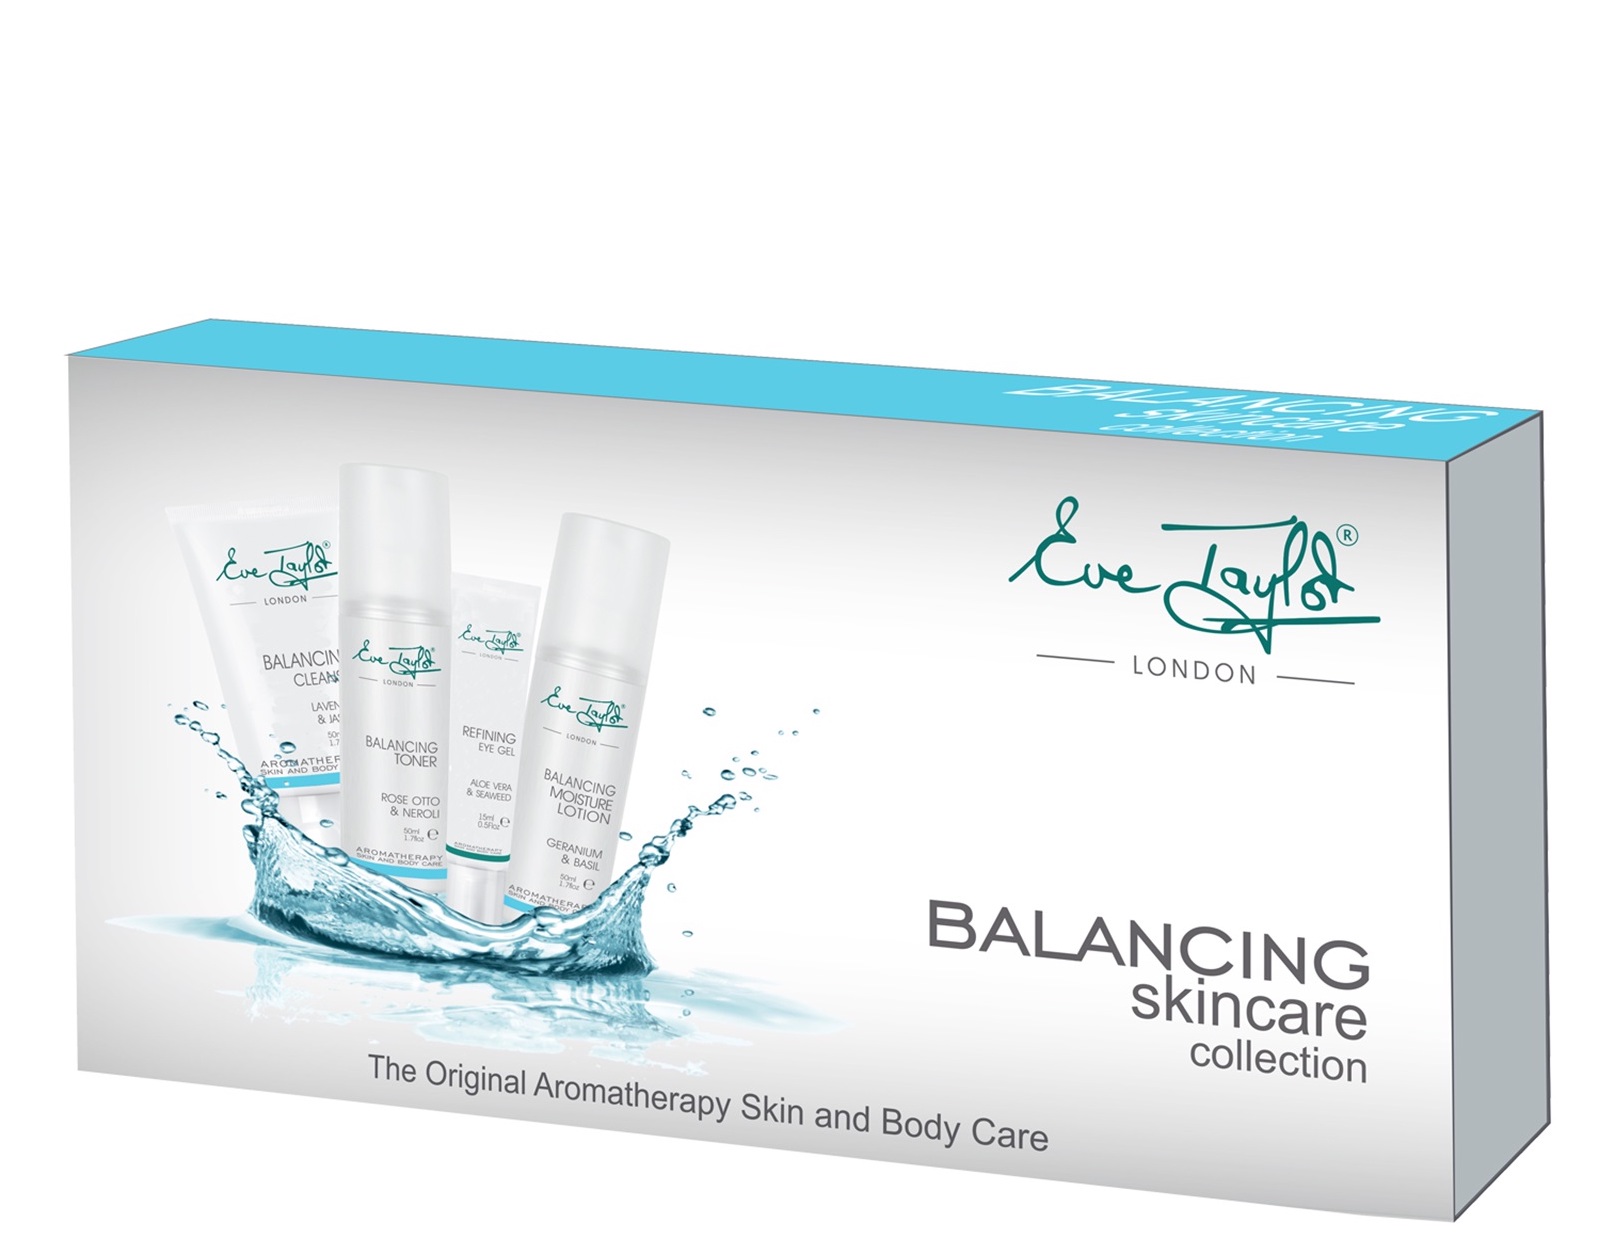 Balancing Skincare collection